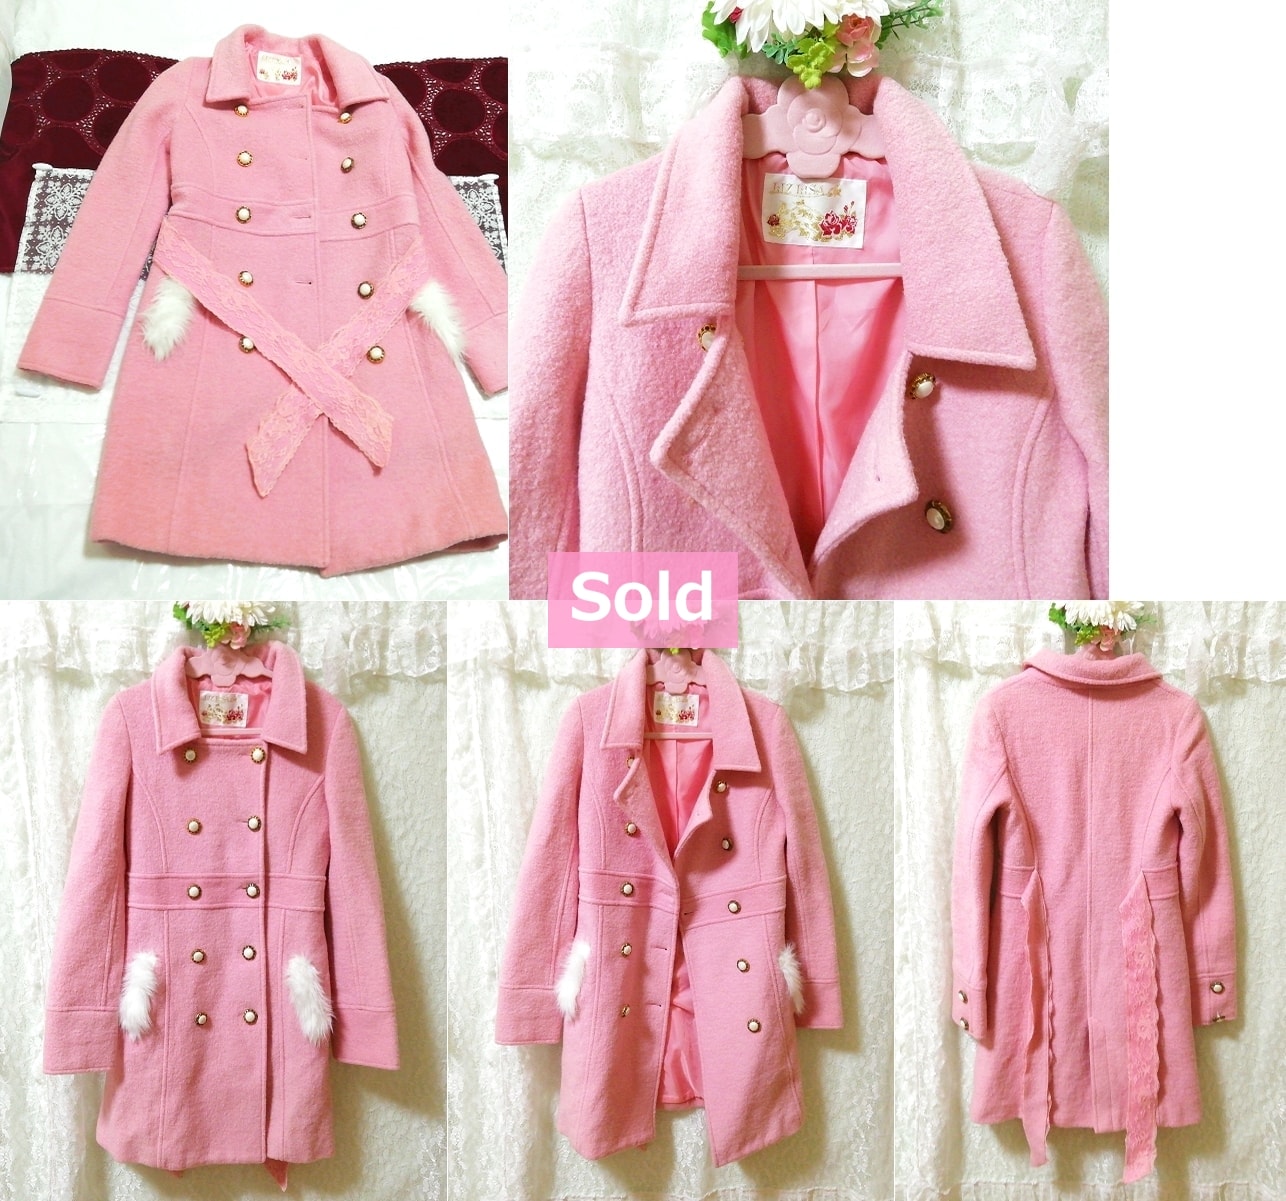 Liz Lisa LIZ LISA Pink Girly Lace Belt Симпатичное длинное пальто